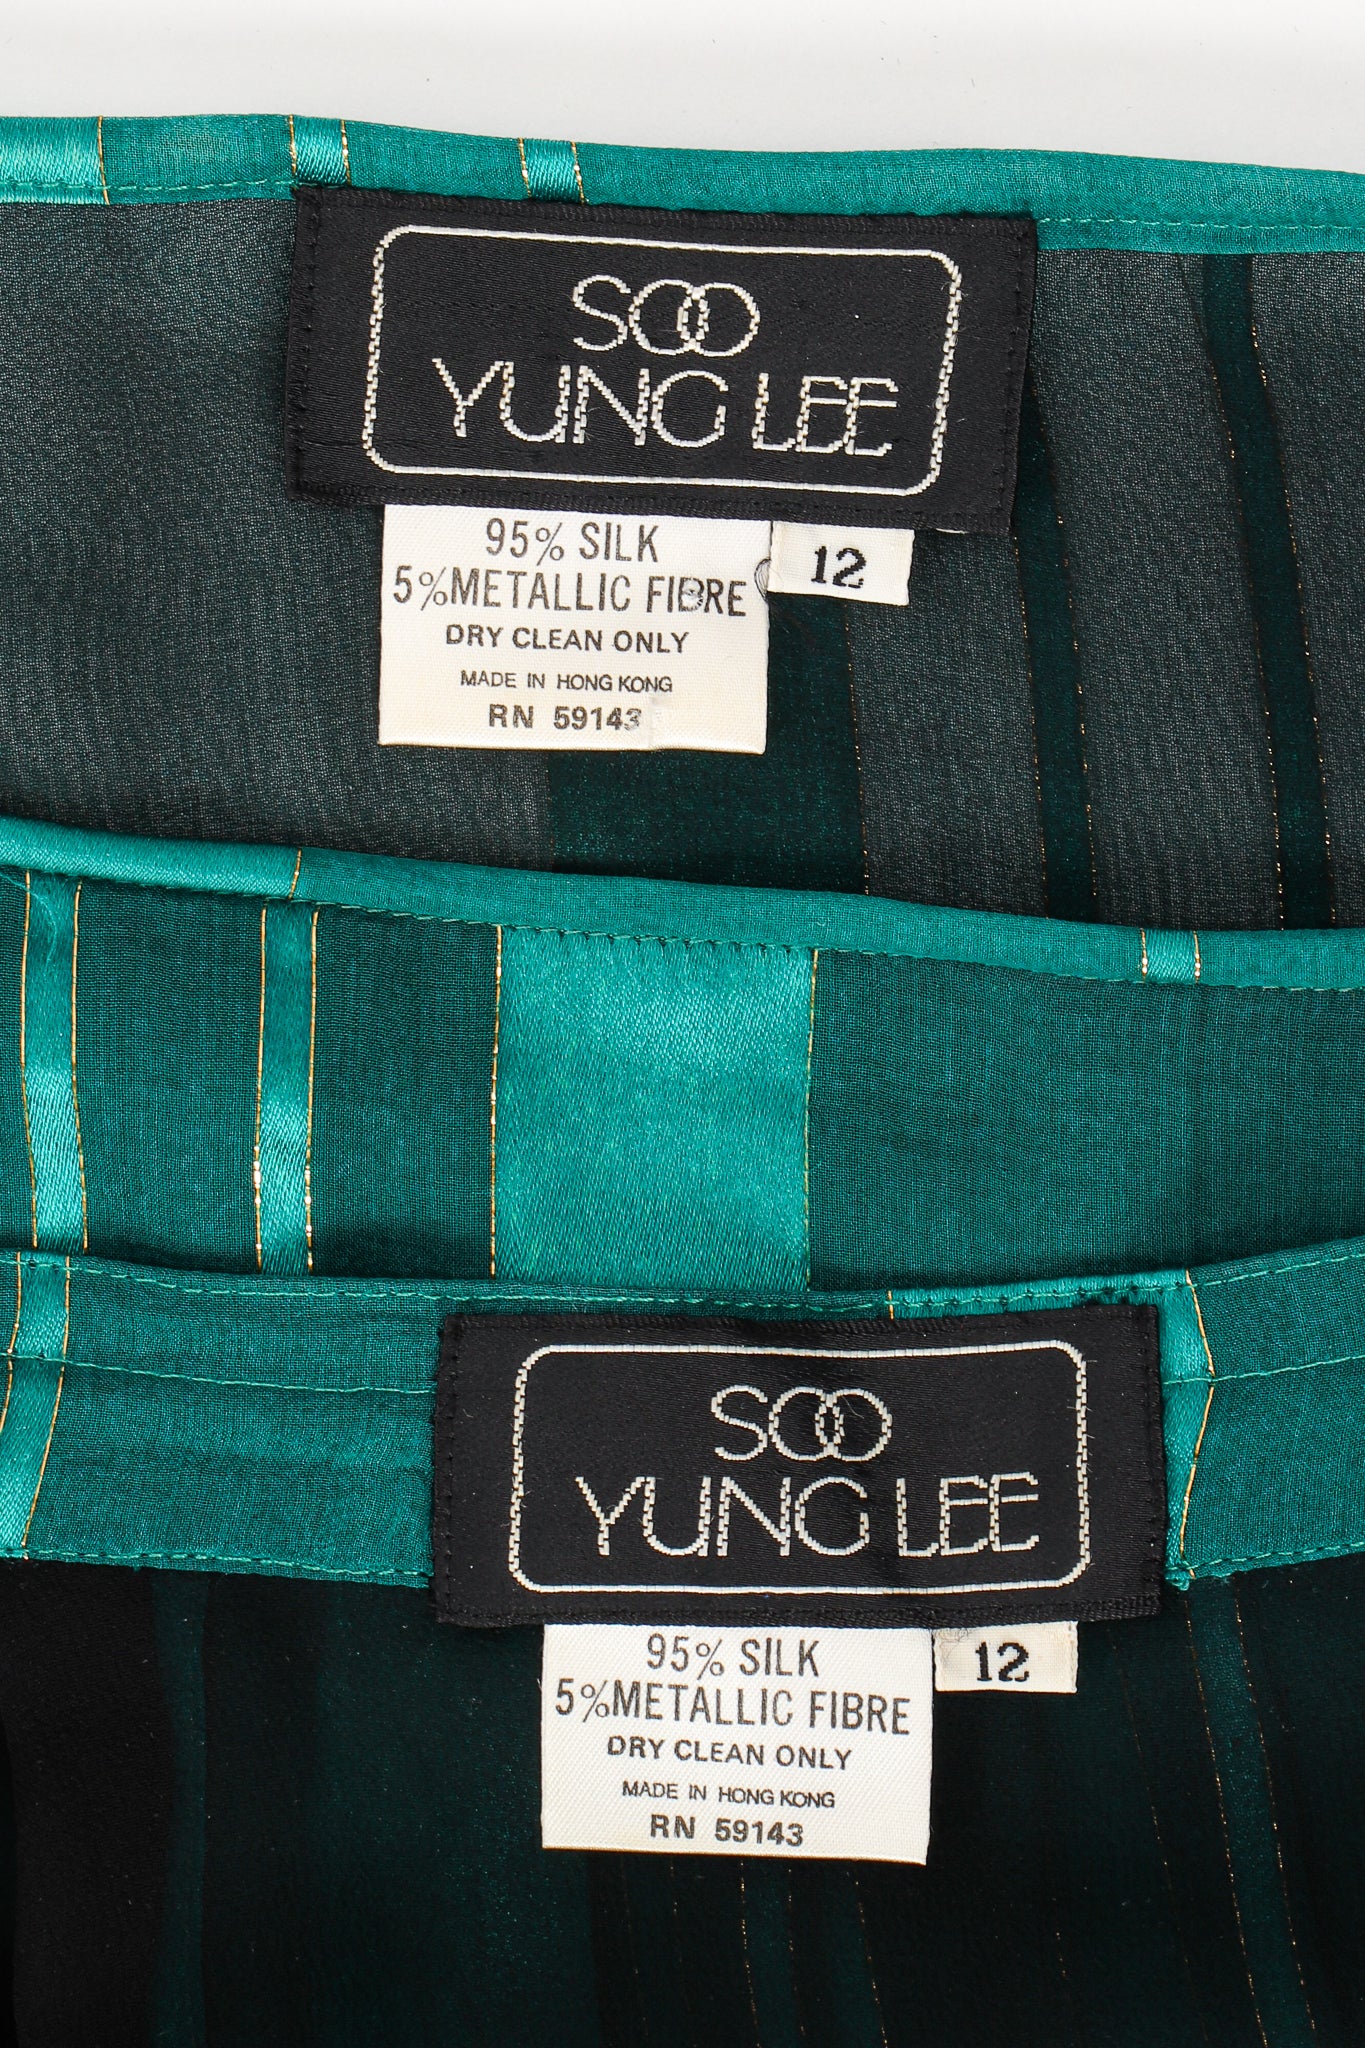 Vintage Soo Yung Lee Rainbow Ombré Chiffon Blouse & Skirt Set labels at Recess LA